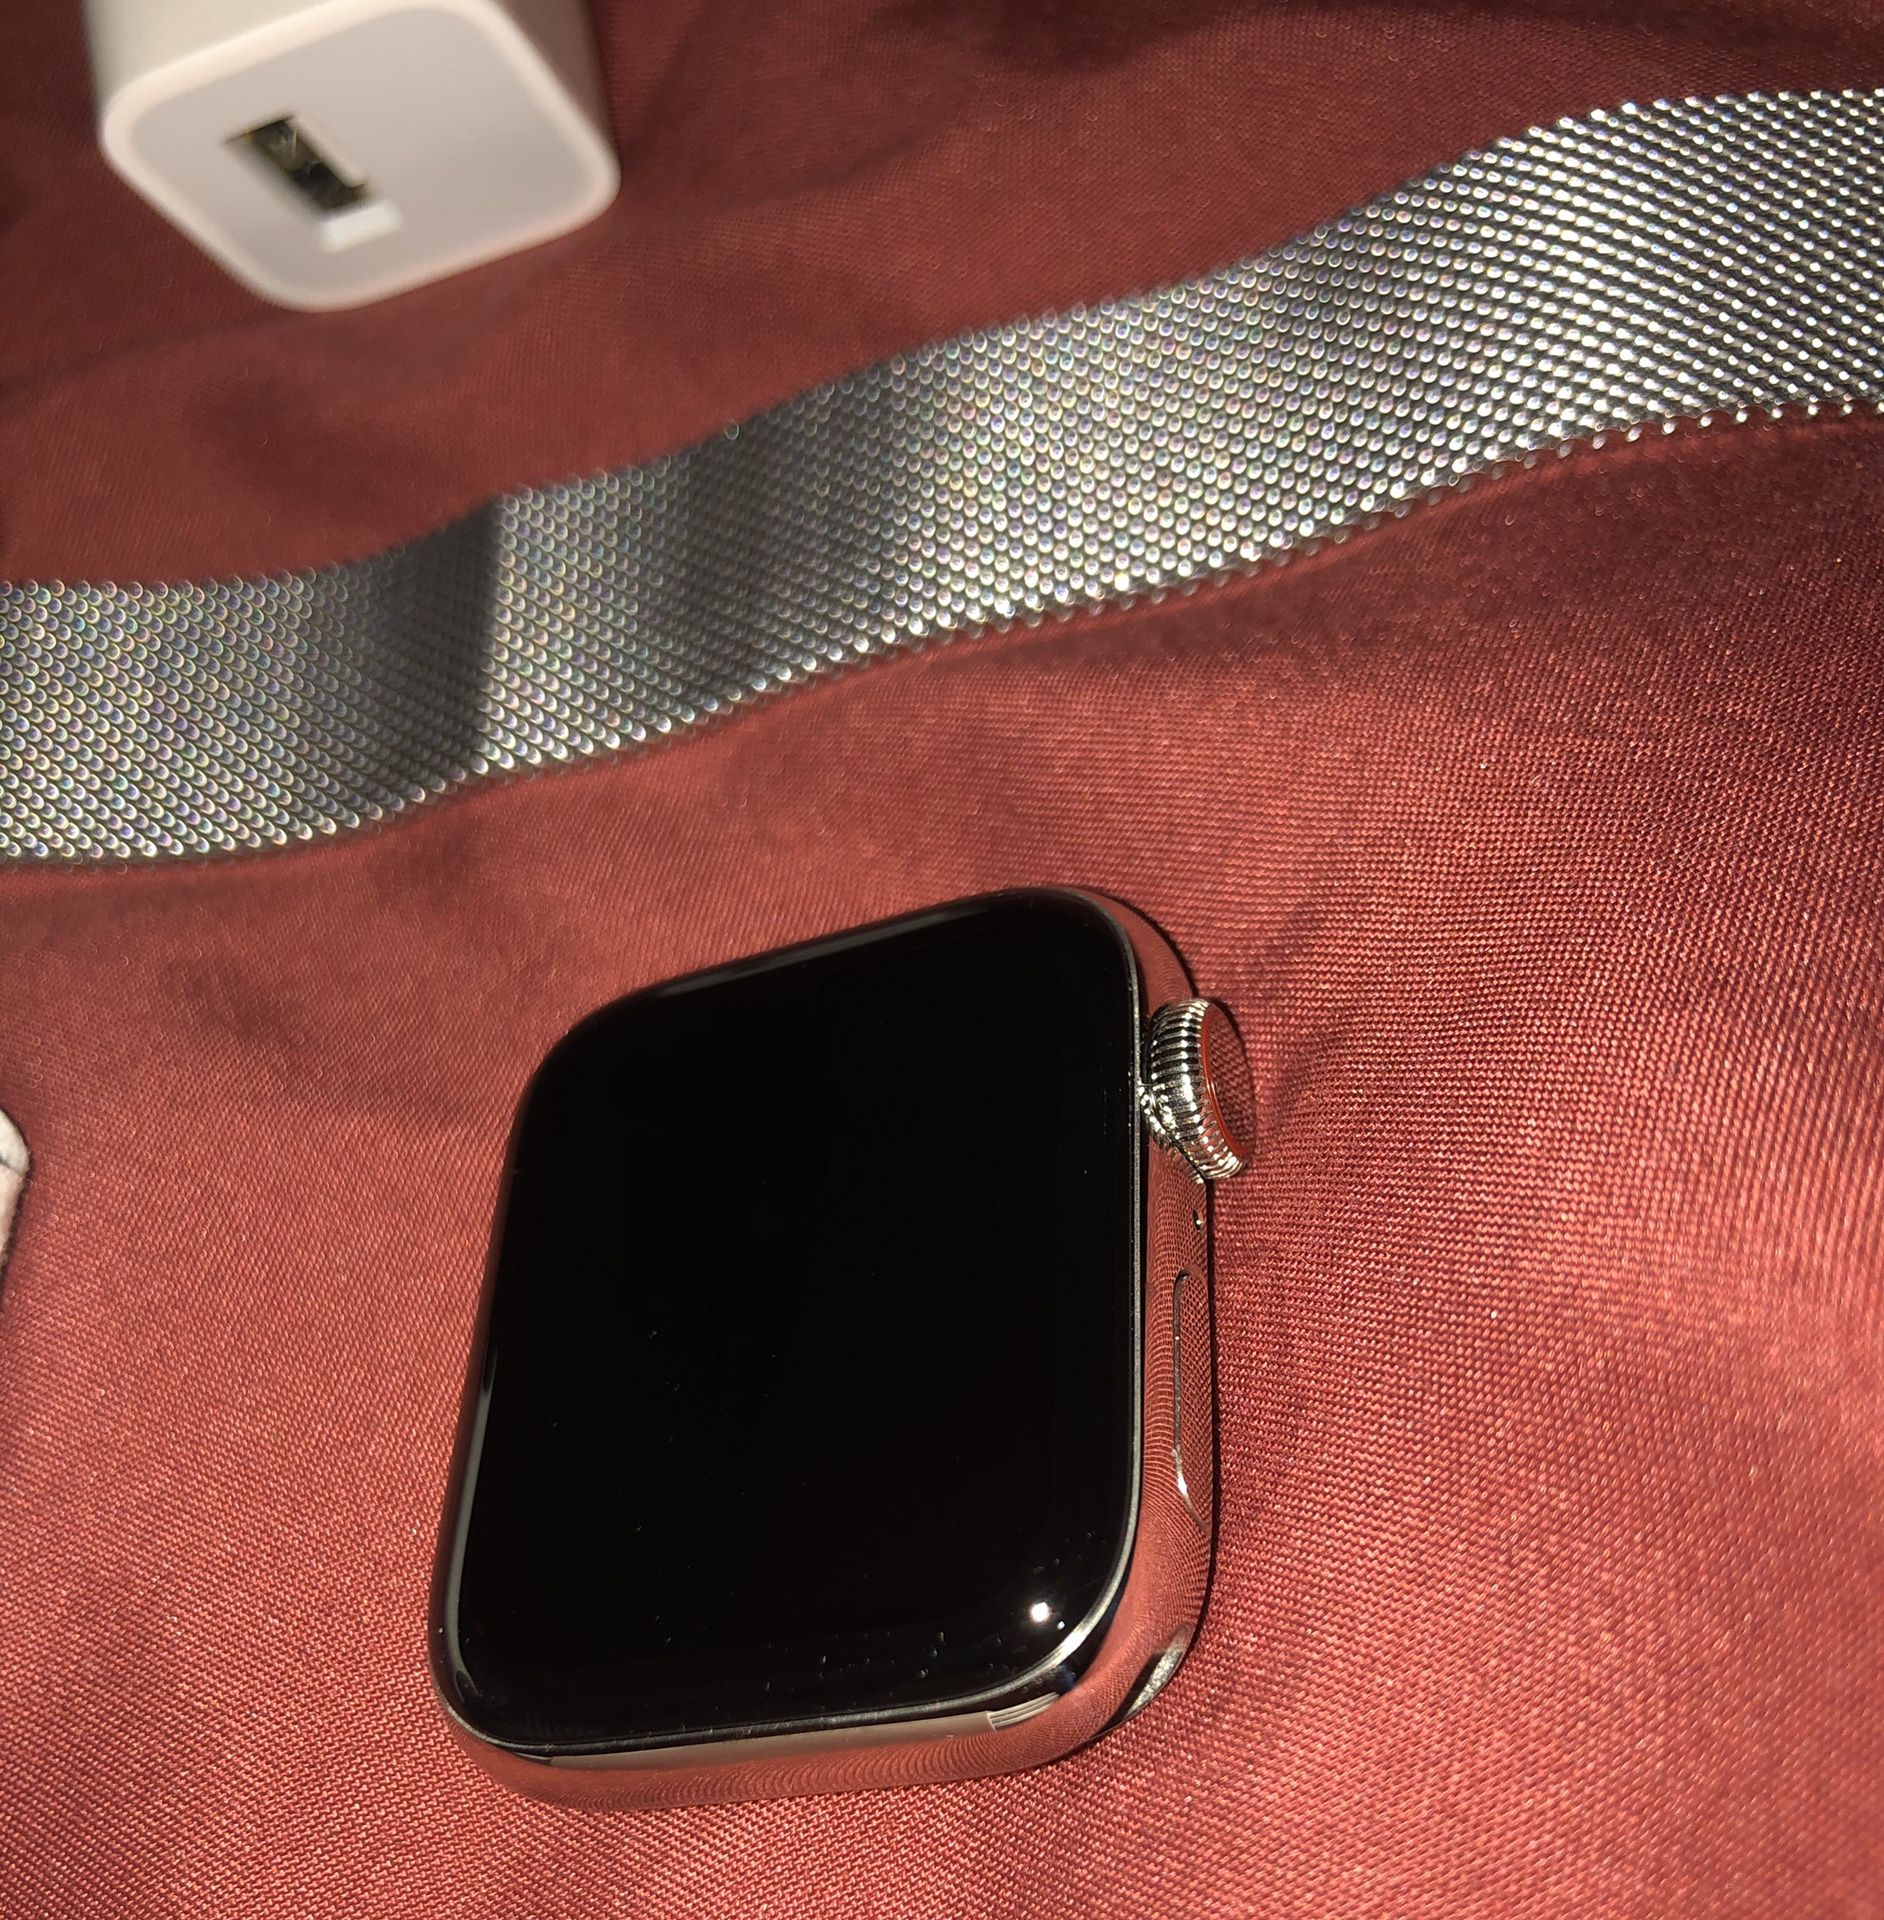 Apple Watch Series 5 40mm (GPS/CELLULAR) Stainless Steel/Ceramic Body w Milanese Loop